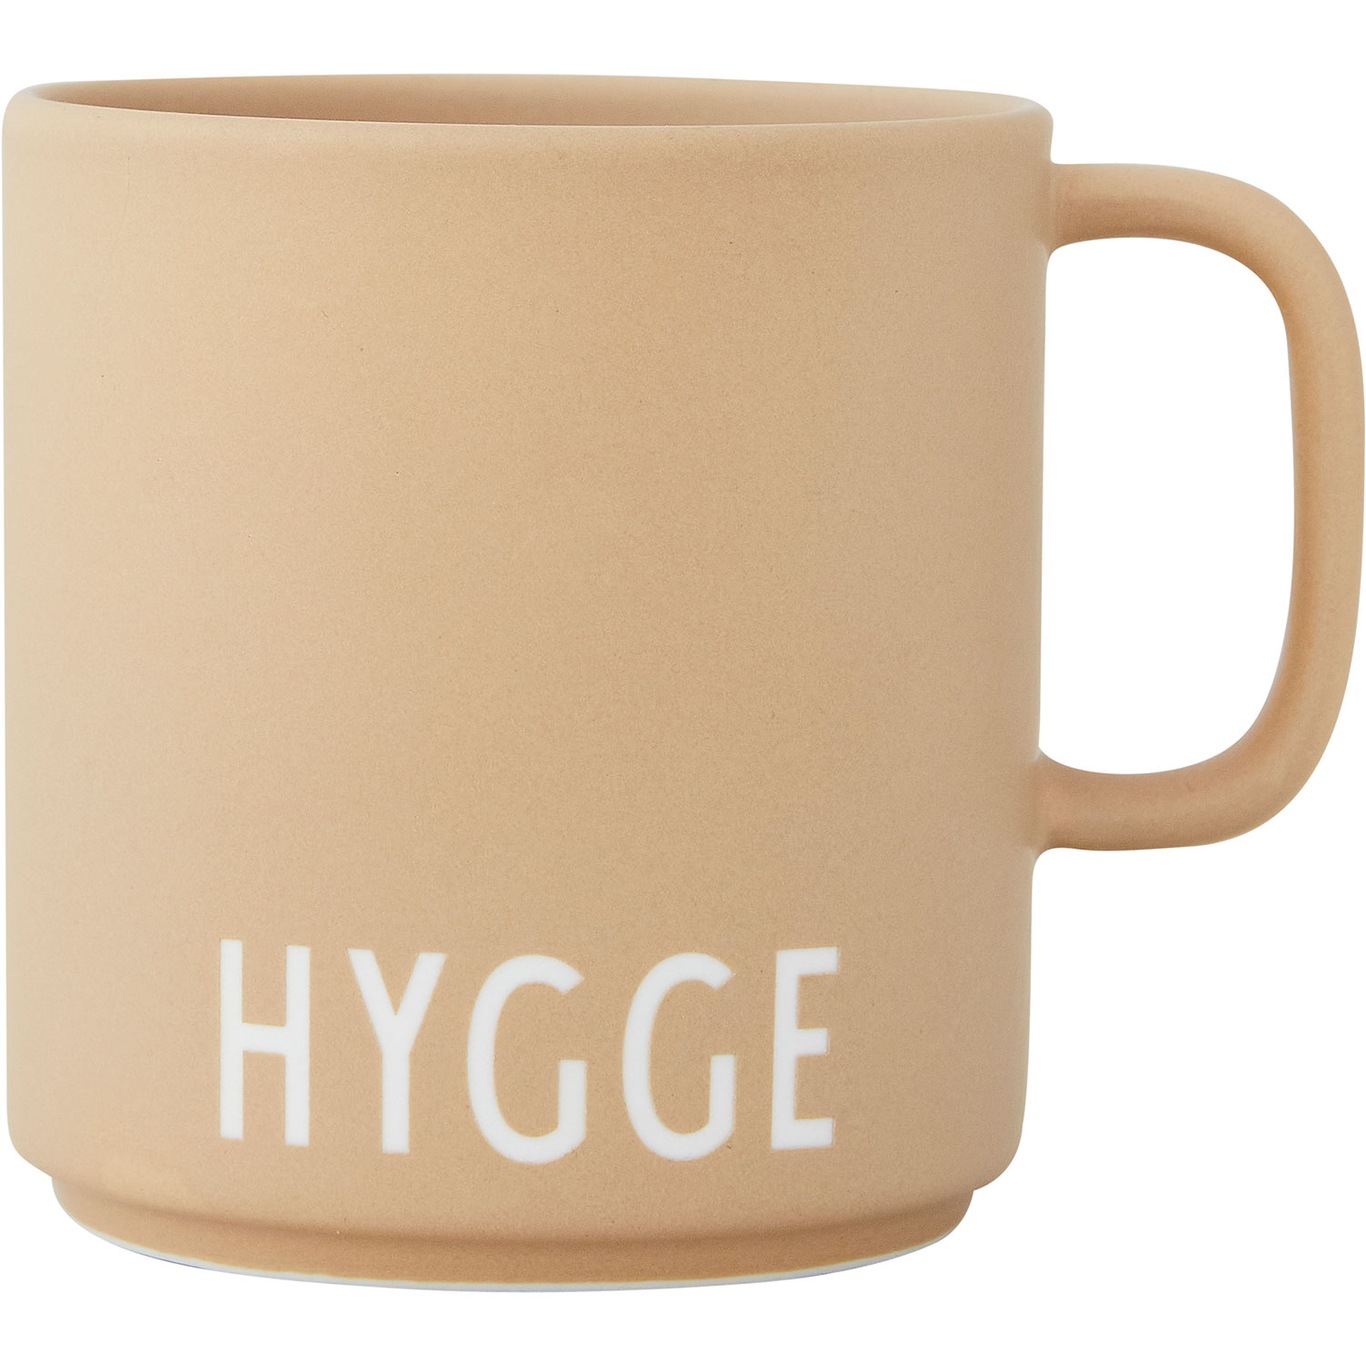 Favourite Tasse, Hygge